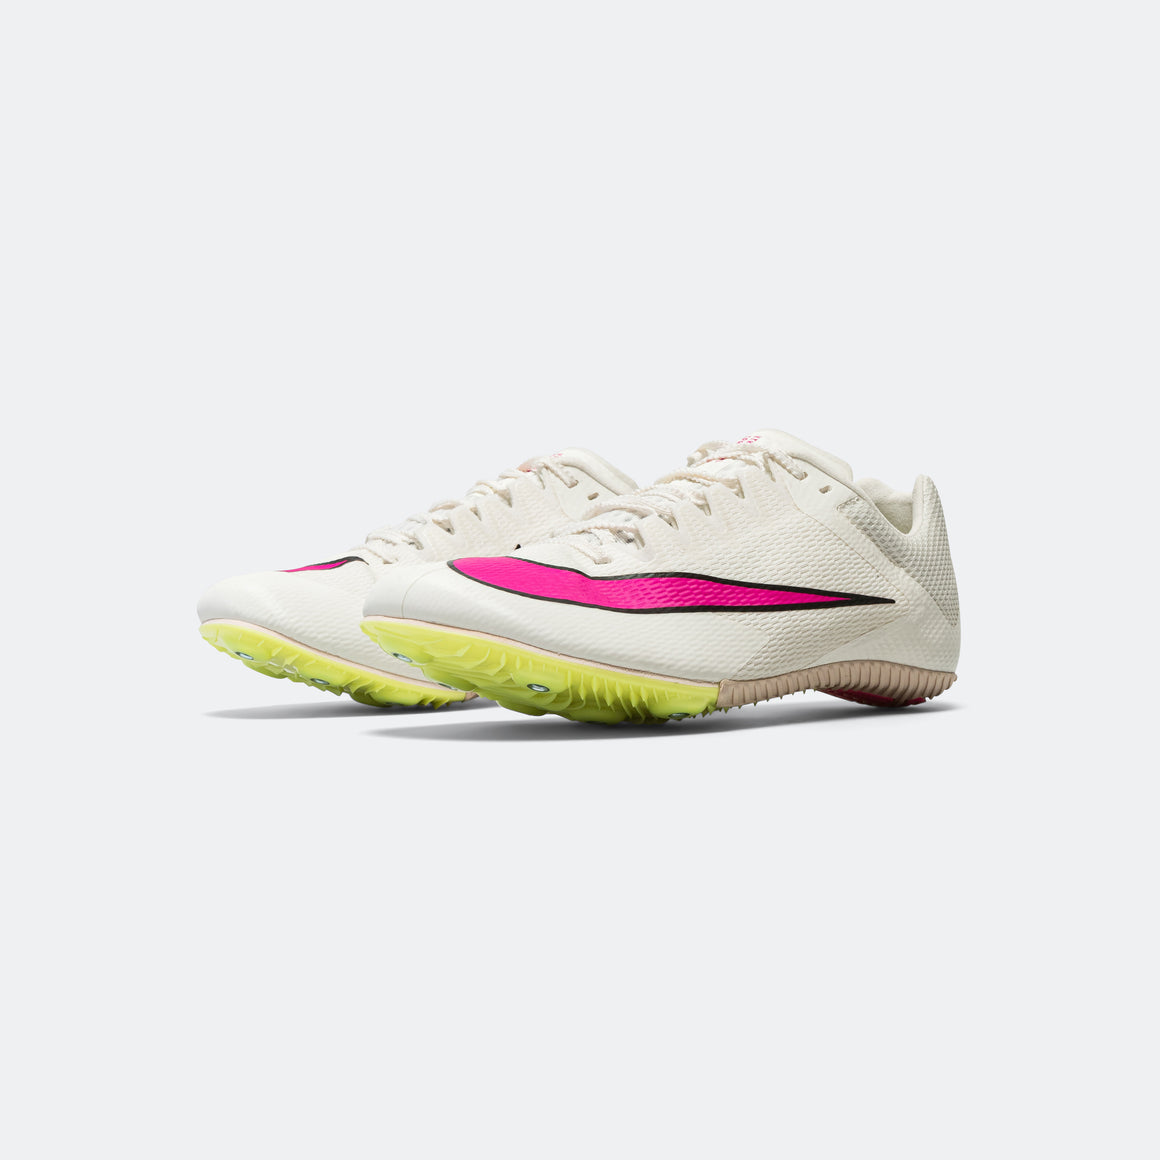 Nike - Mens Zoom Rival Sprint - Sail/Fierce Pink-Lt Lemon Twist - Up There Athletics